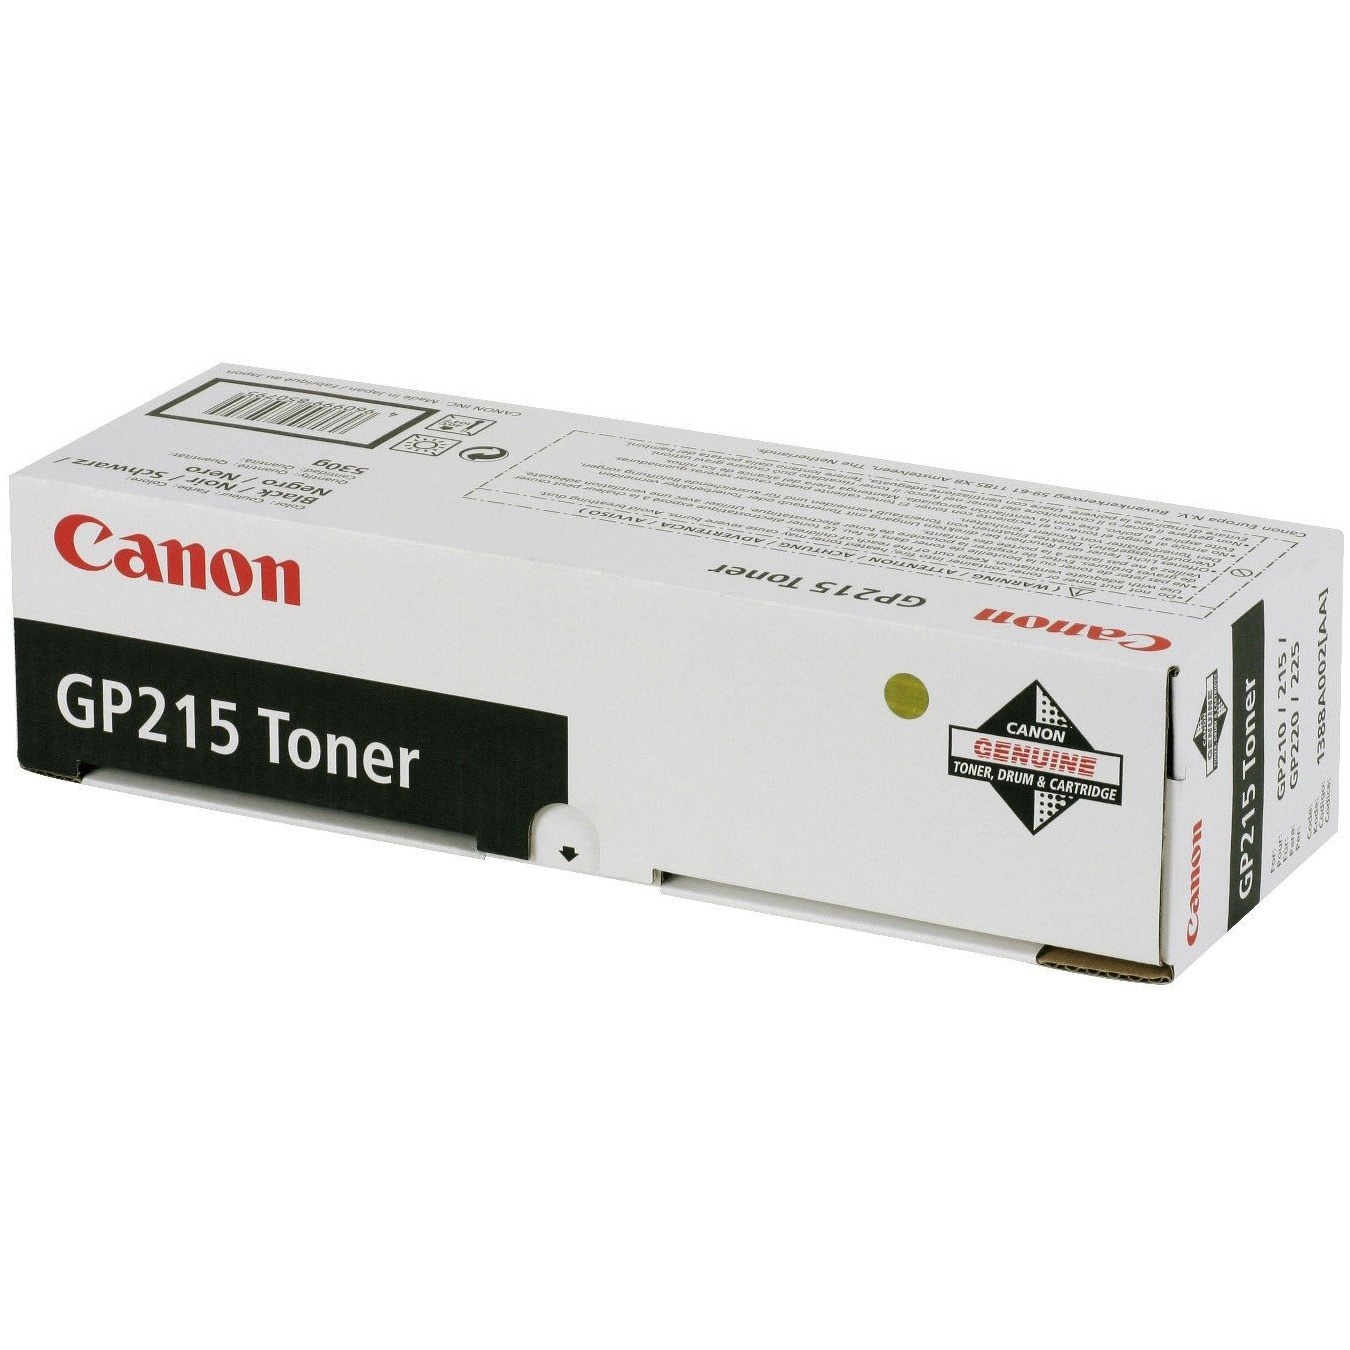 Original Canon GP215 Black Toner Cartridge (1388A002)